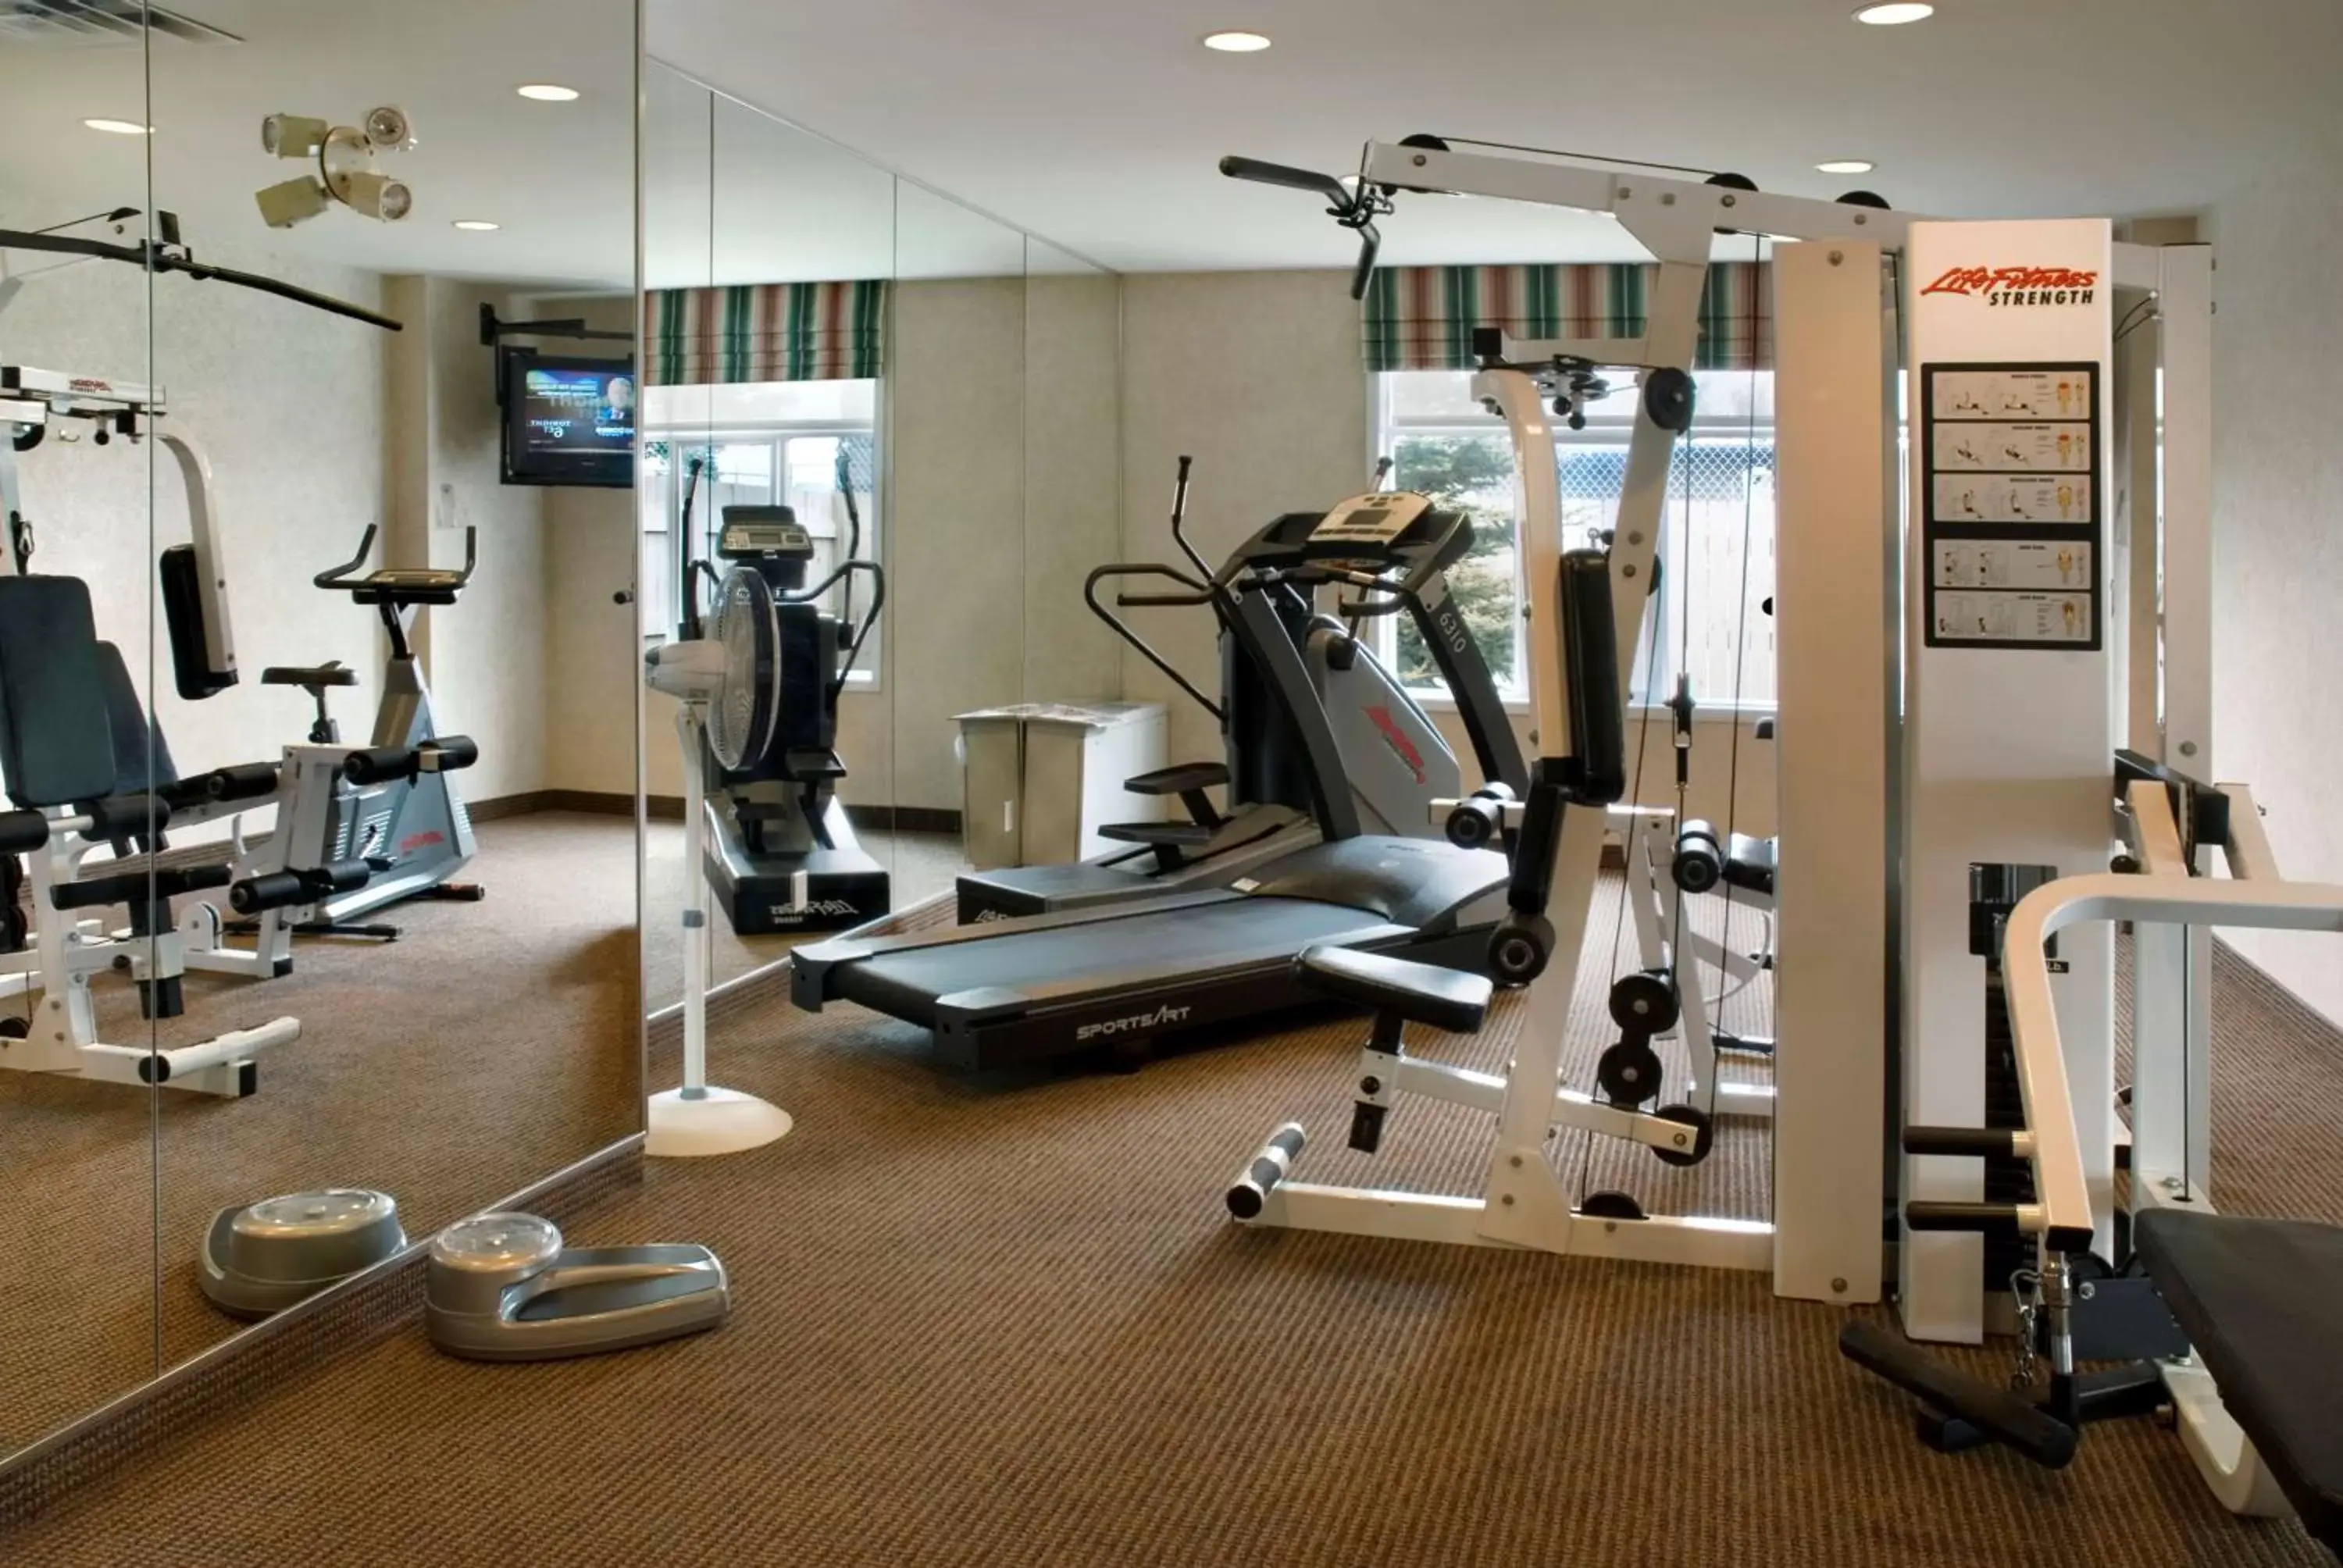 Fitness centre/facilities, Fitness Center/Facilities in Hilton Garden Inn Calgary Airport